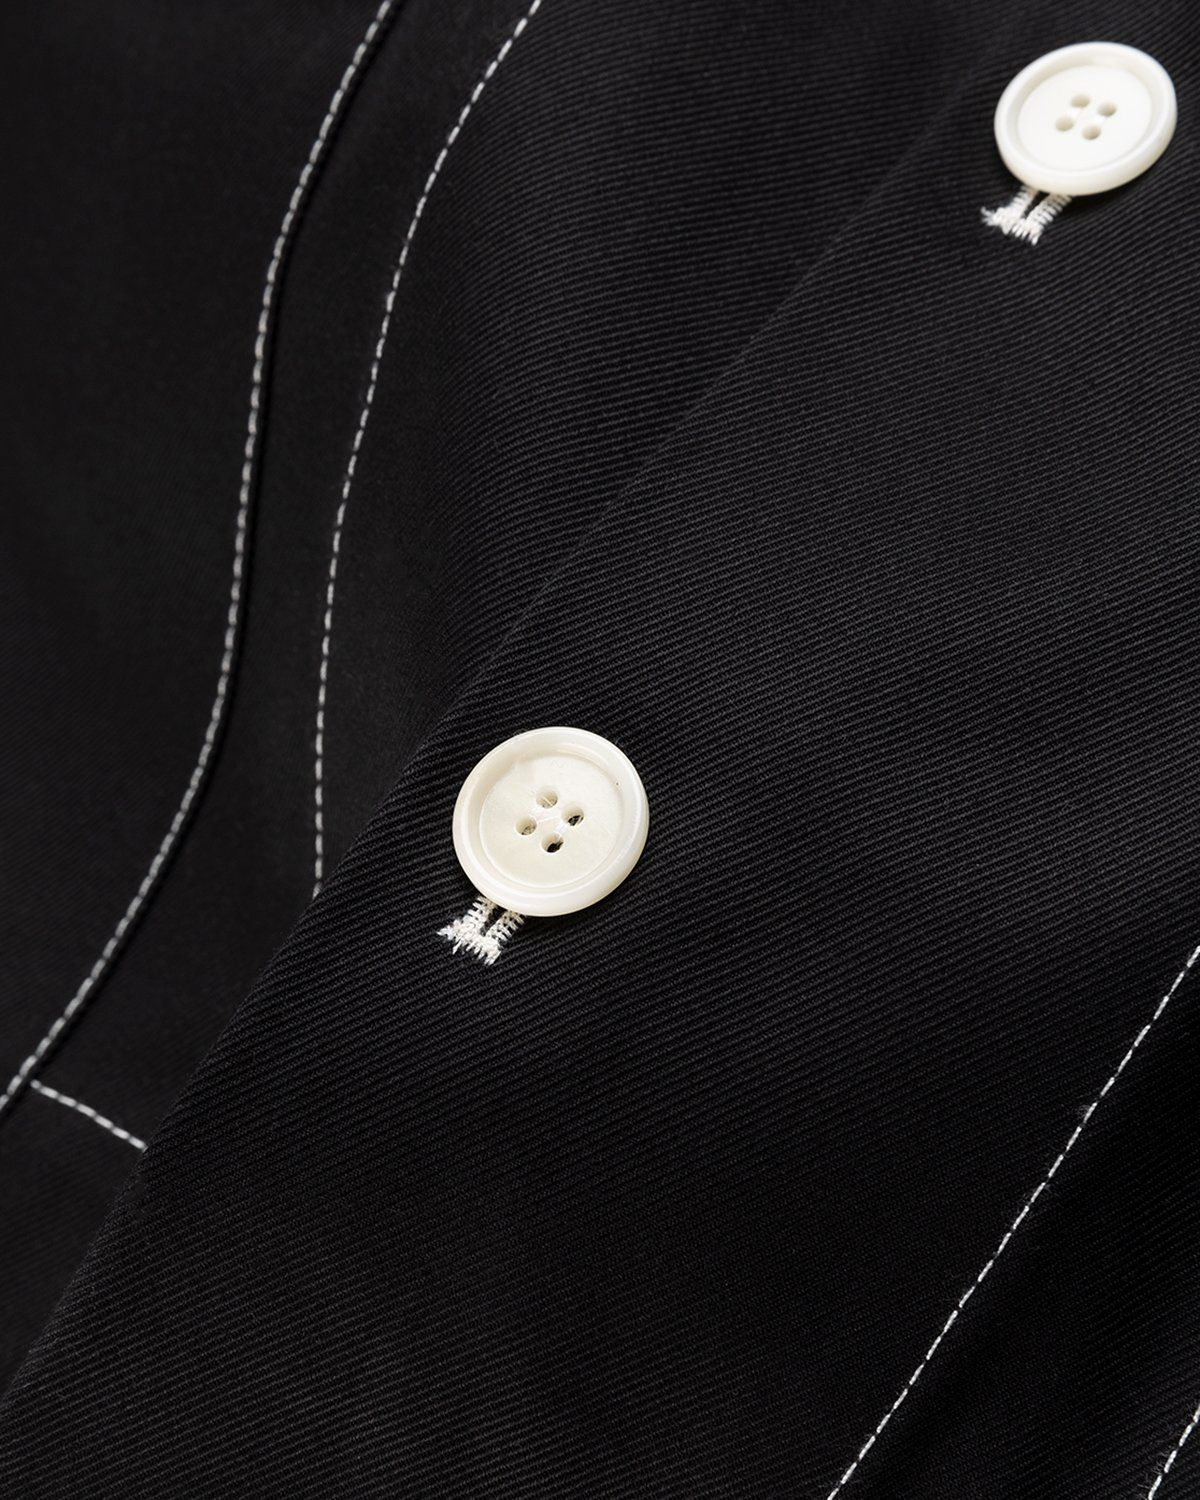 Acne Studios – Heavy Twill Jacket - Outerwear - Black - Image 5